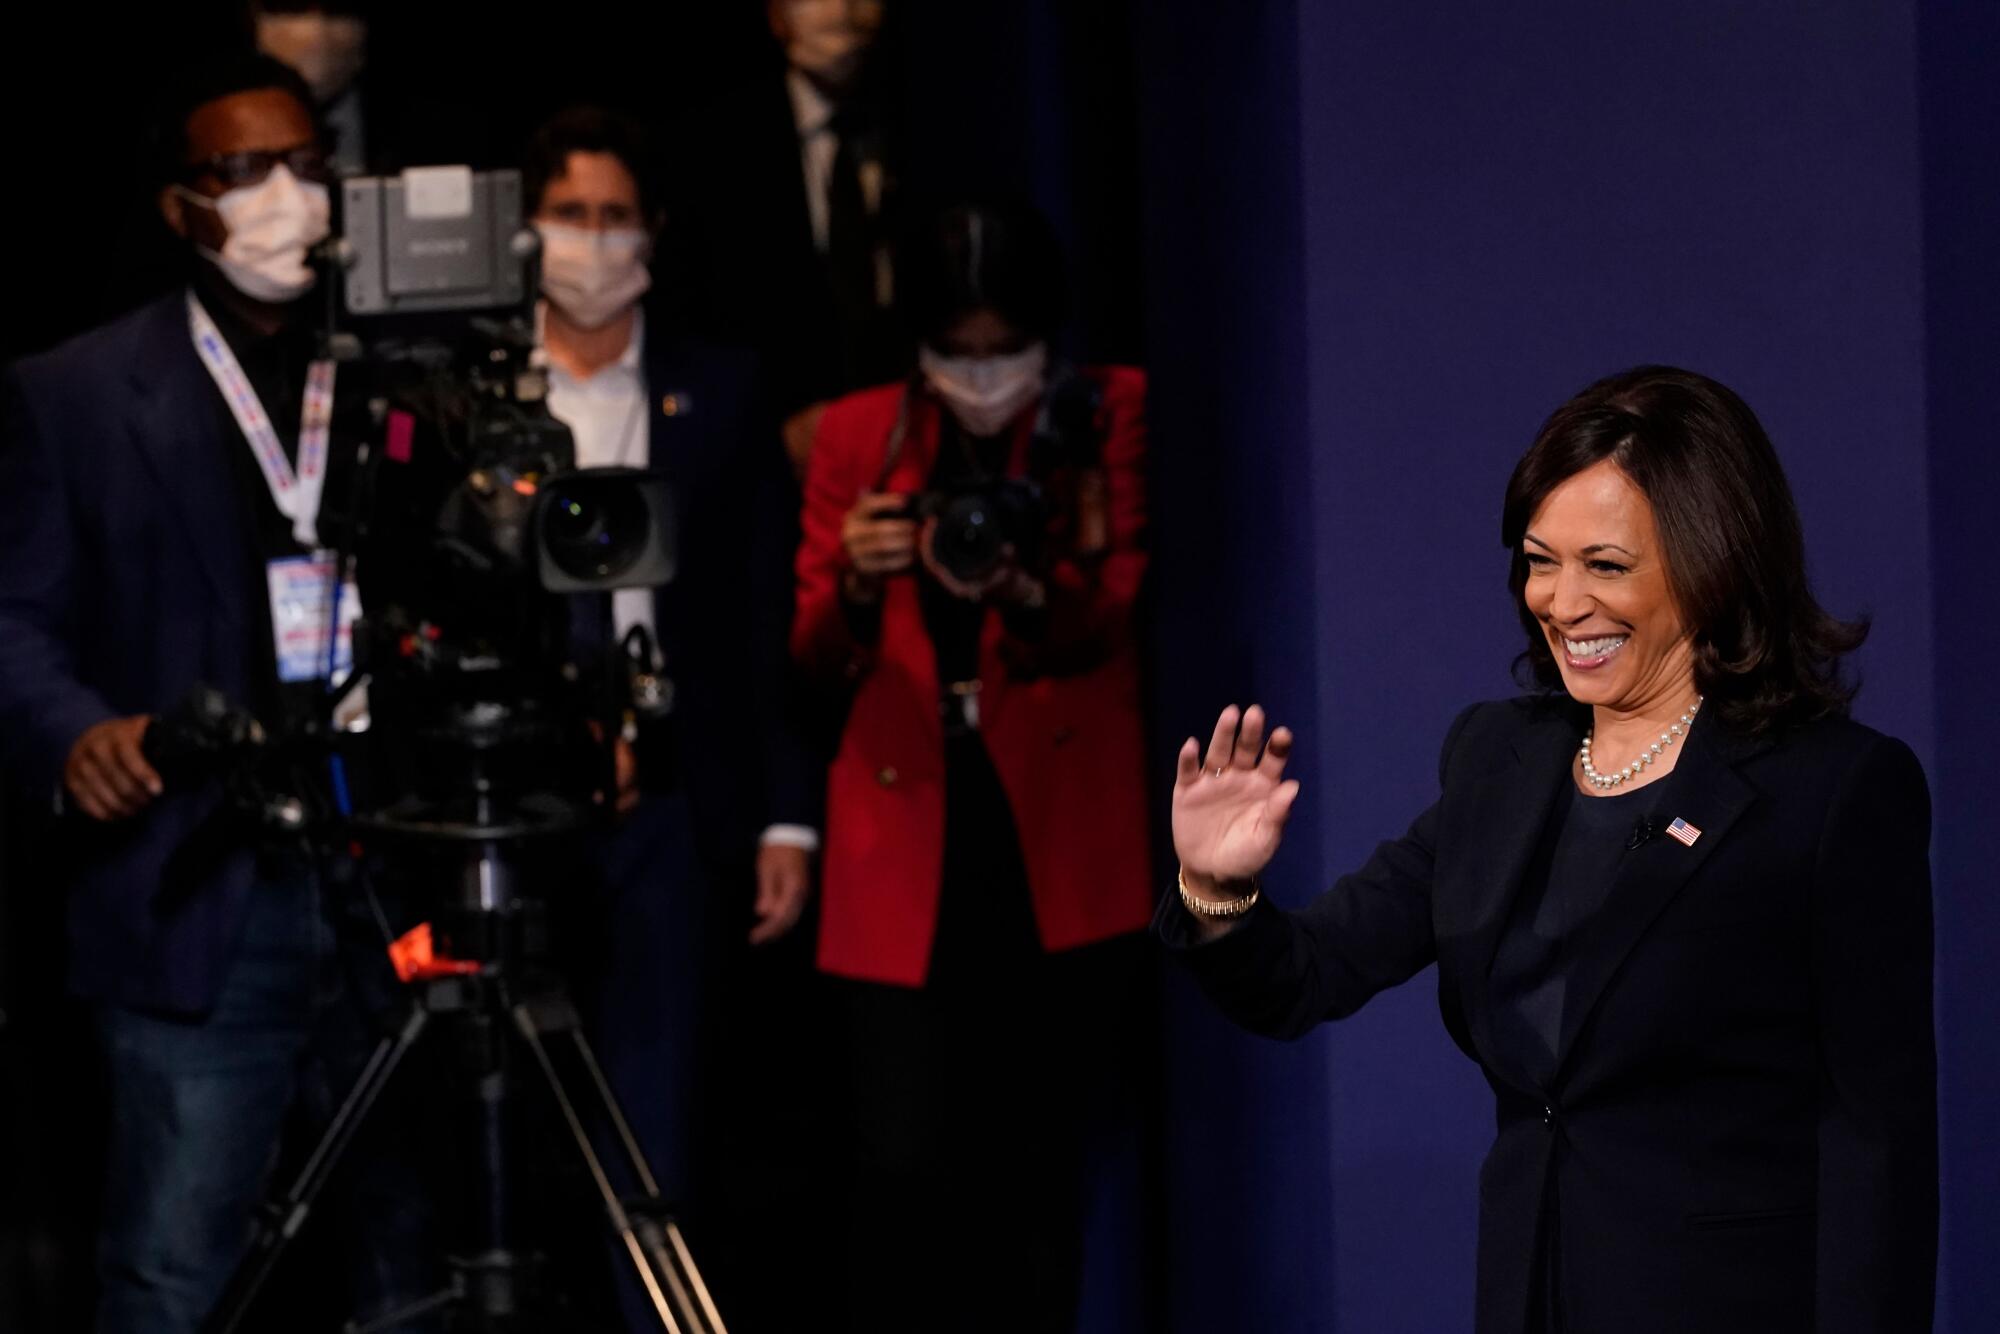 Kamala Harris waves to people at the debate hall